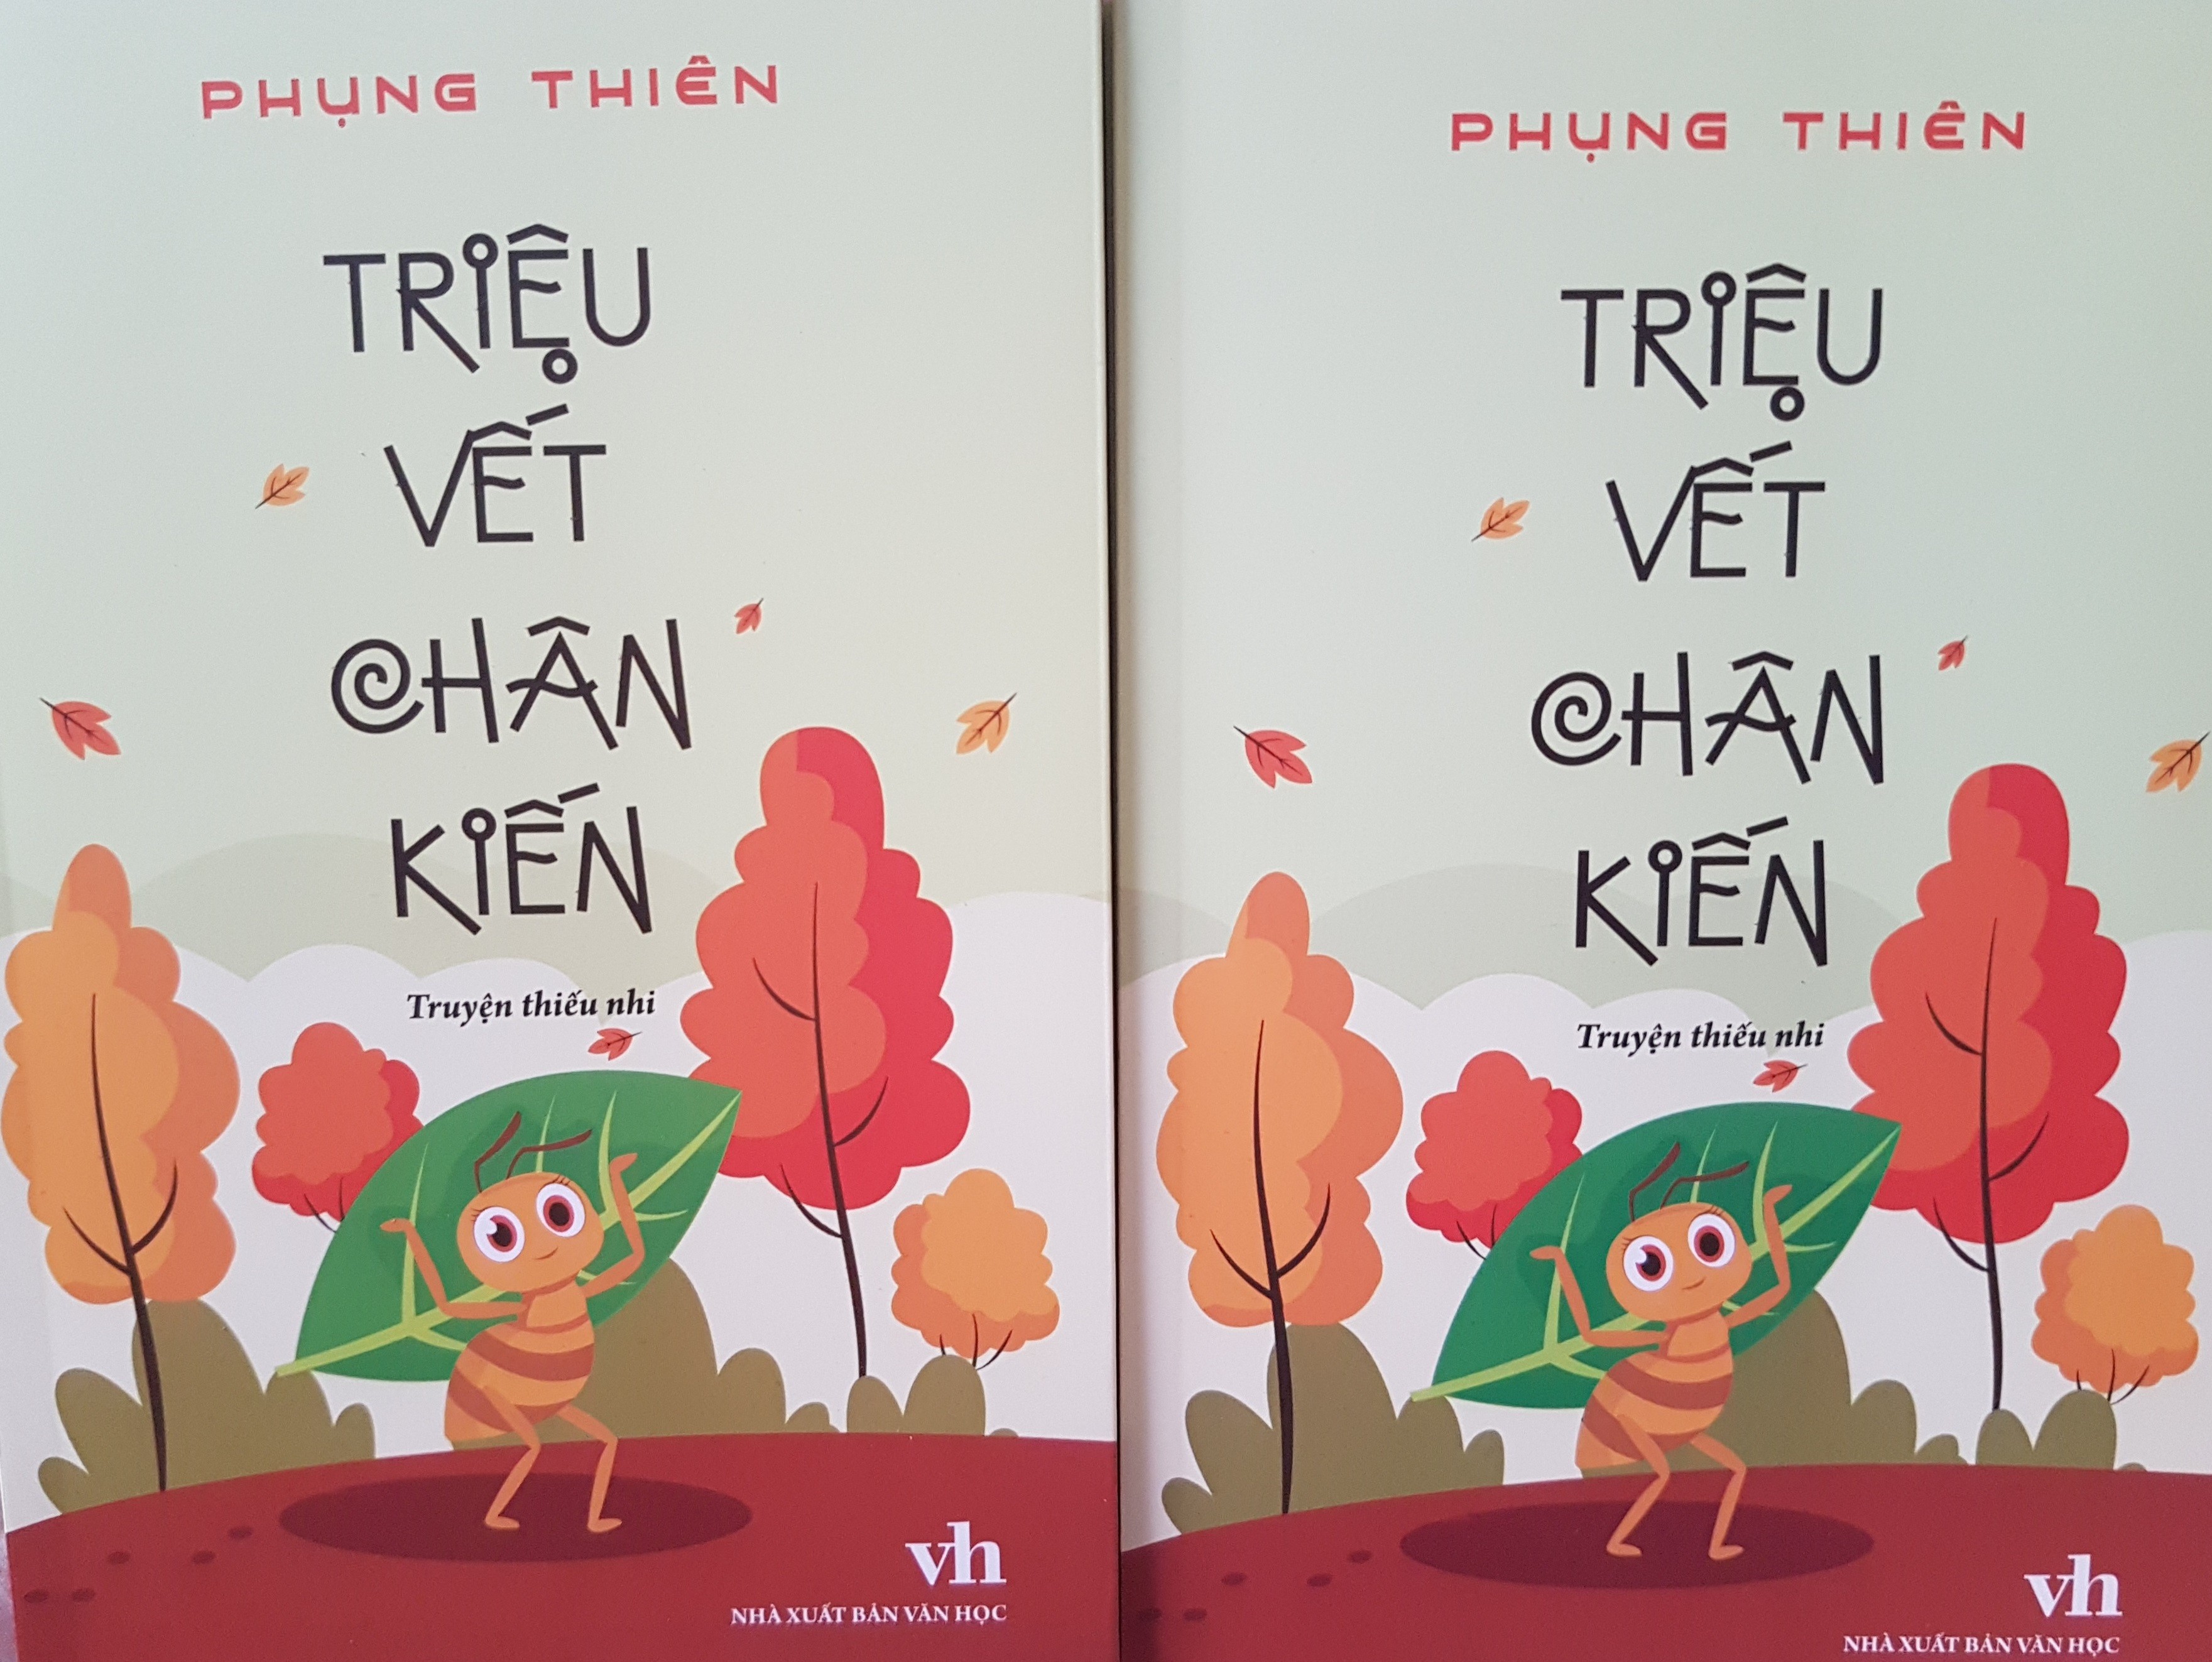 trieu-vet-chan-kien-phung-thien-1632930741.jpg